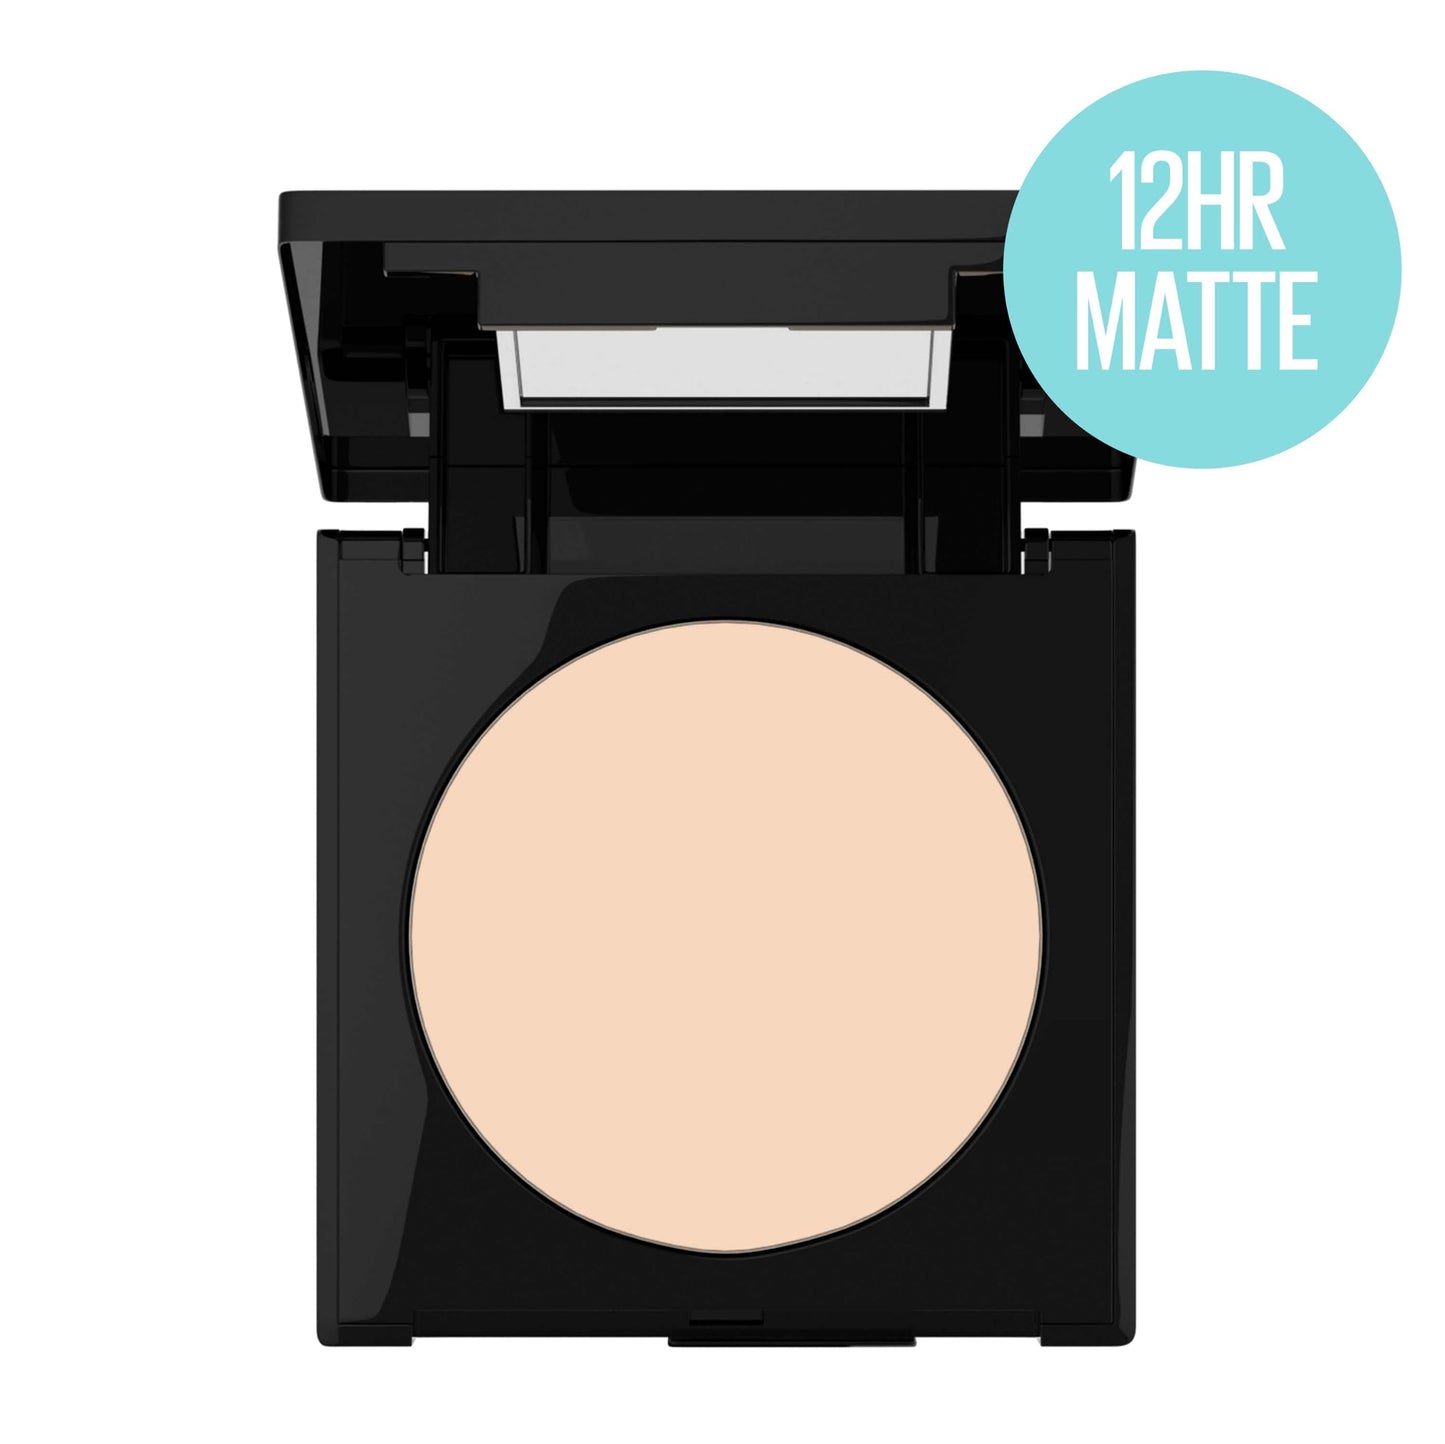 Maybelline Fit Me Matte + Poreless Pressed Face Powder Makeup & Setting Powder, Translucent, 1 Count